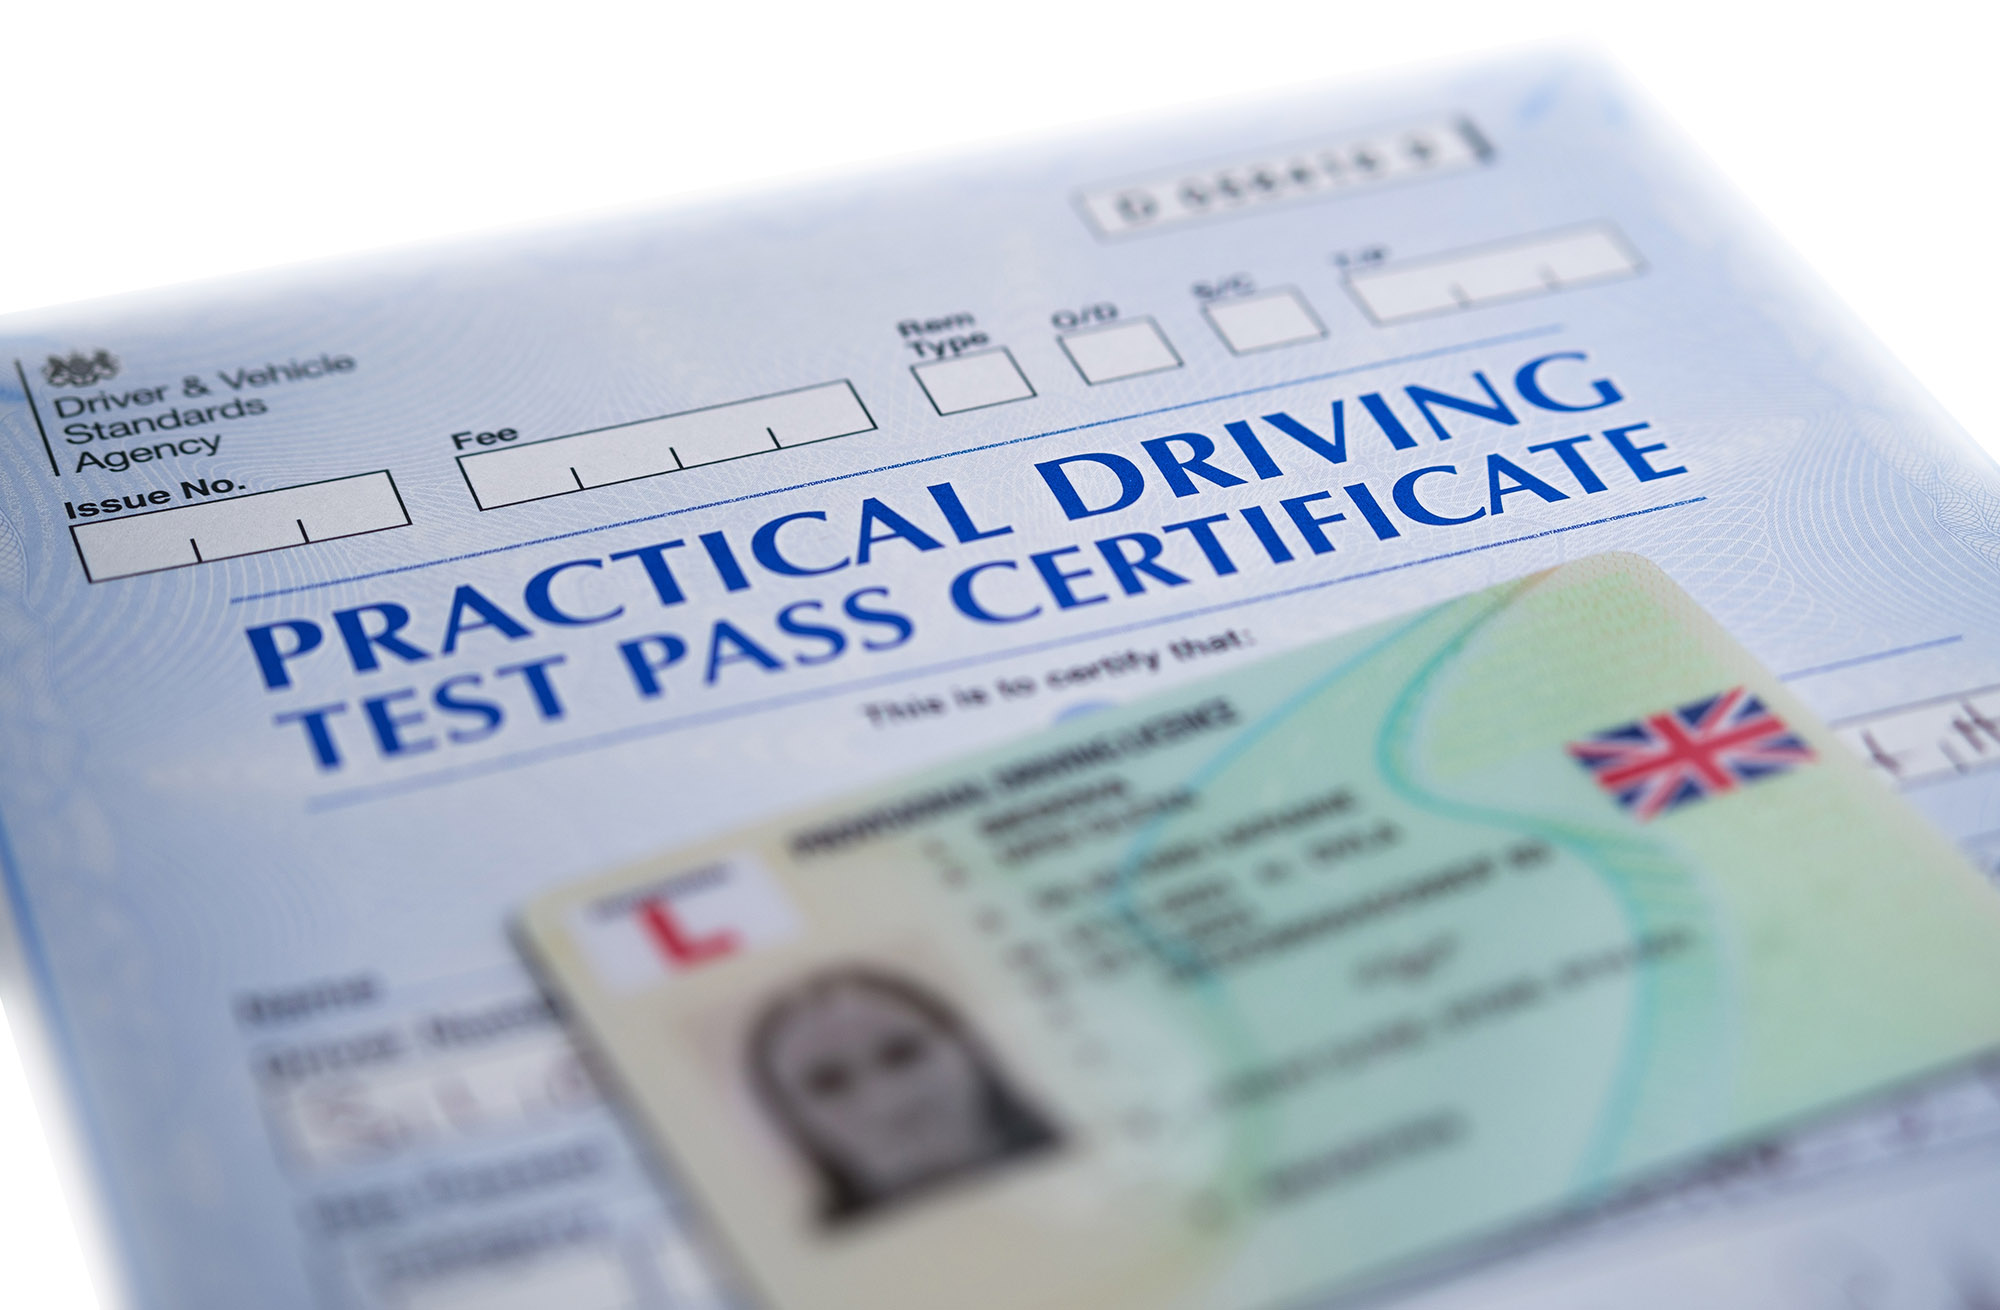 UK test pass certificate